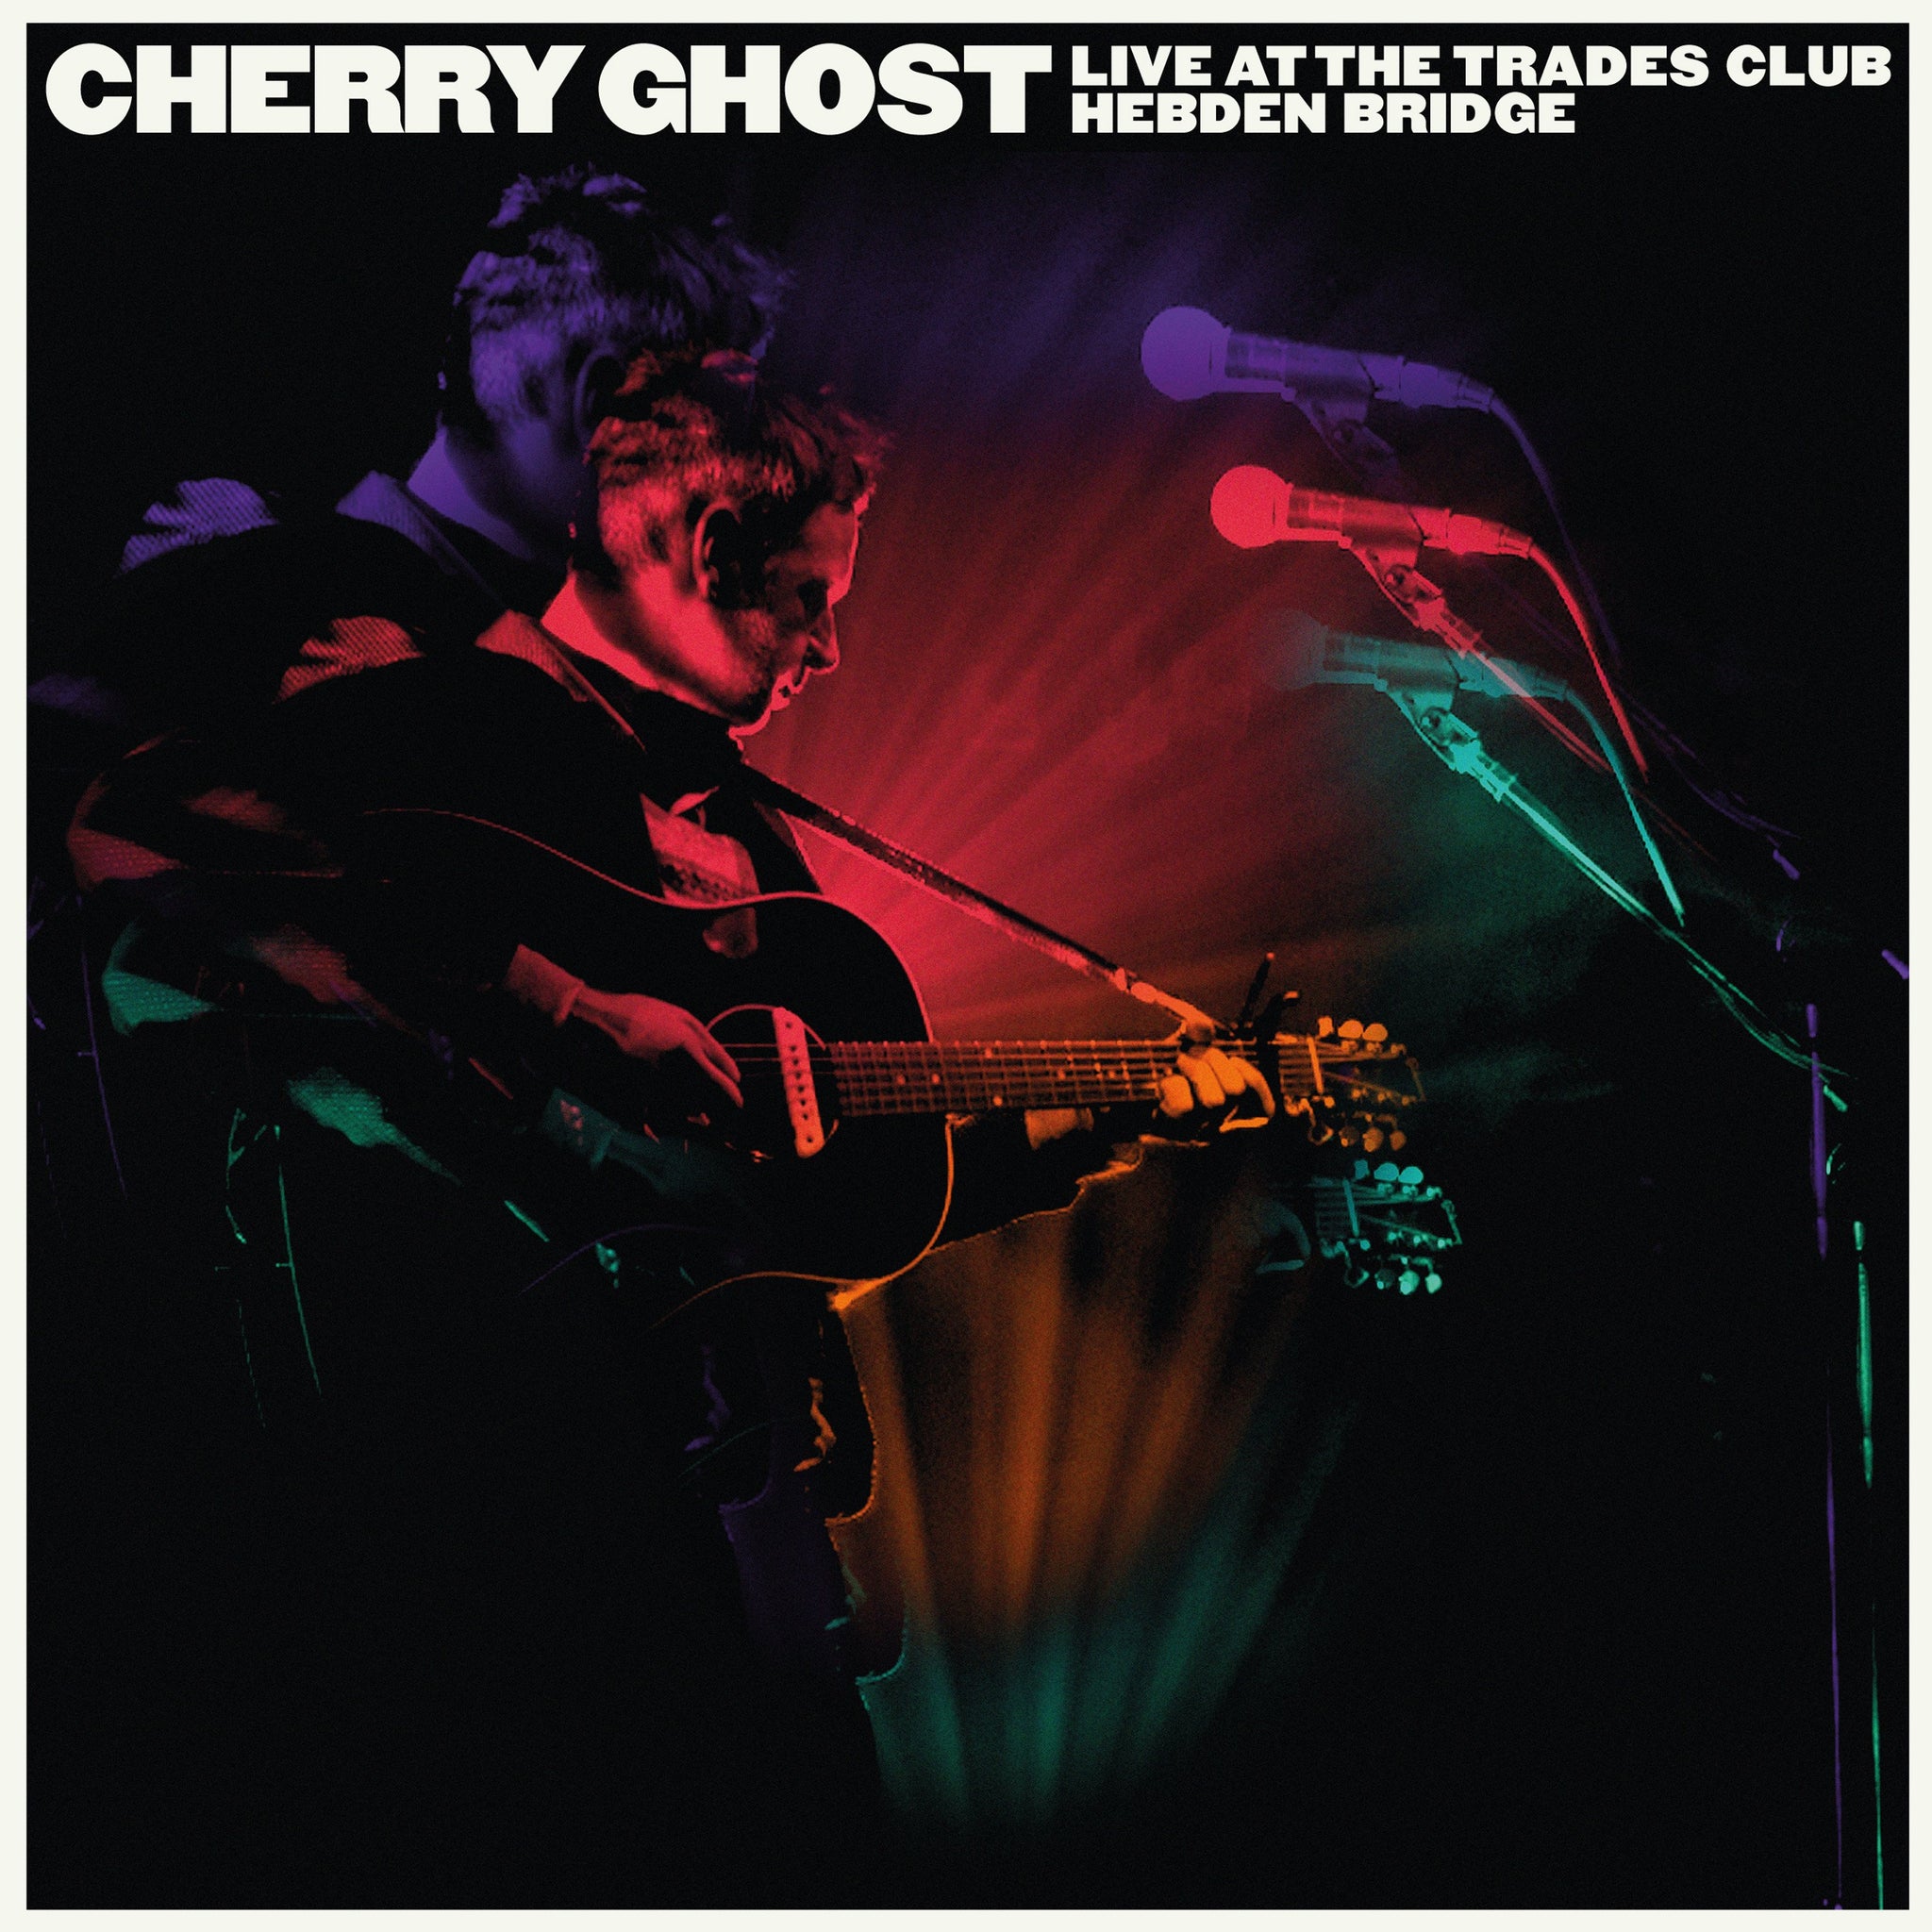 Cherry Ghost - Live at The Trades Club, Hebden Bridge (25 January 2015) (2LP Gatefold Sleeve)